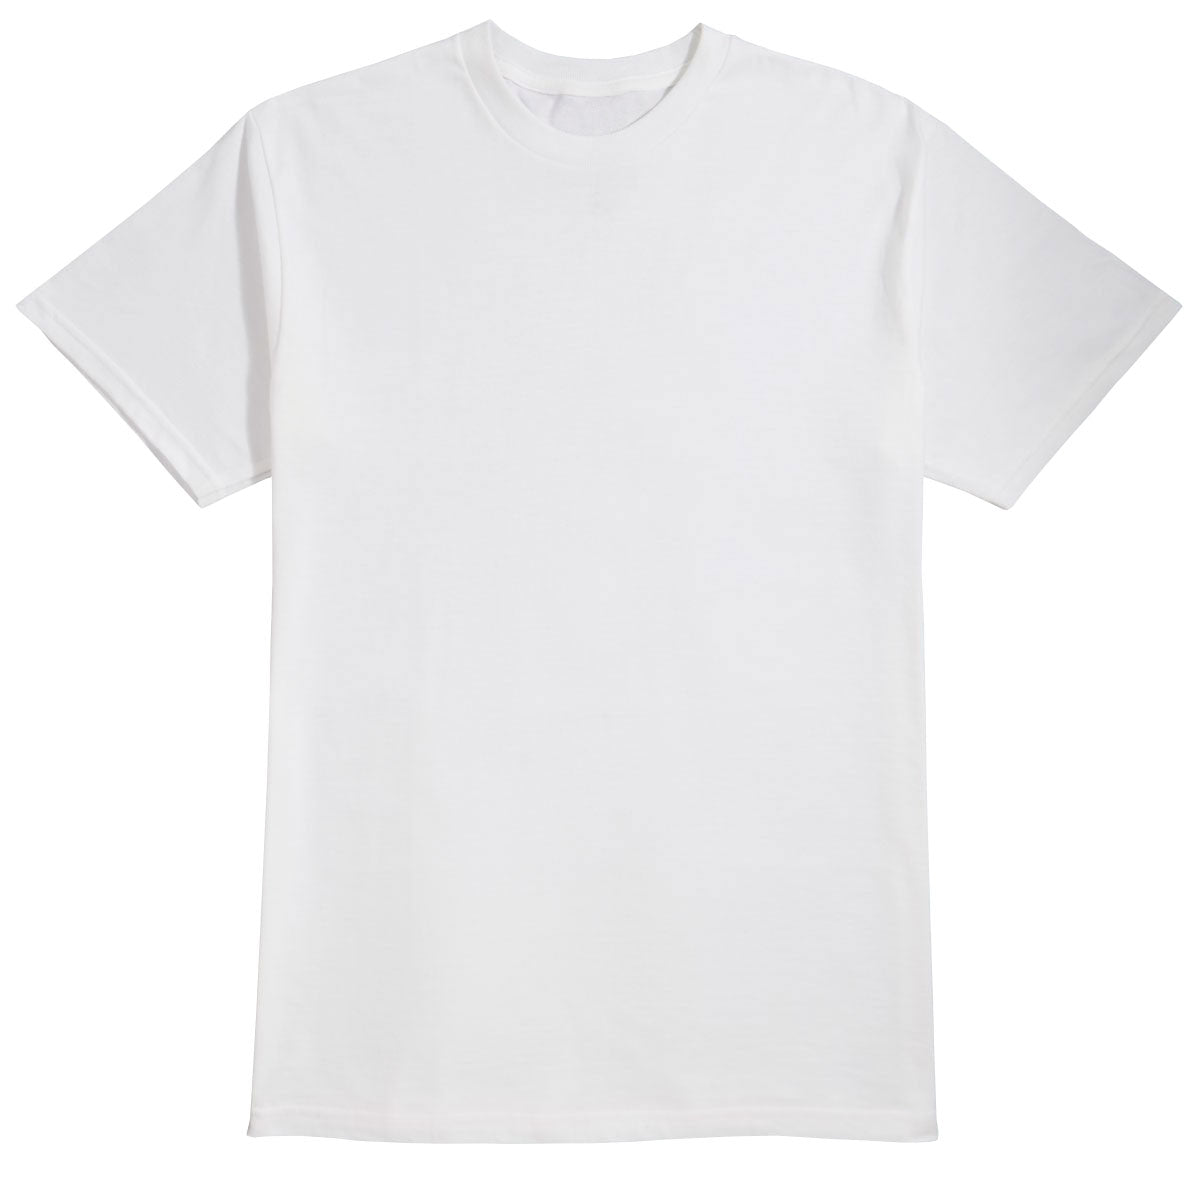 Converse Spider Web T-Shirt - White - LG image 1